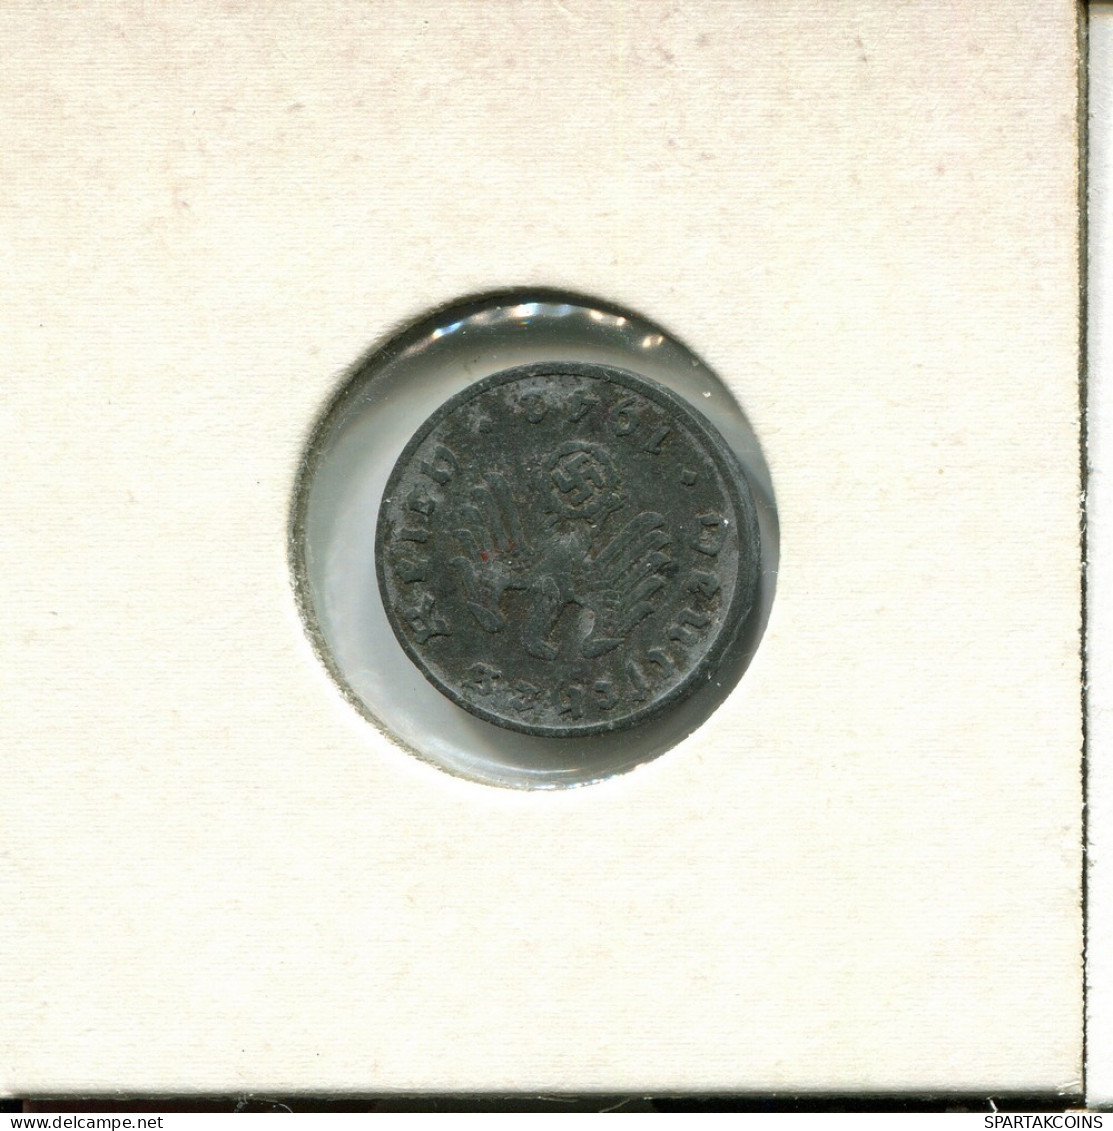 1 PFENNIG 1942 ALEMANIA Moneda GERMANY #AU697.E.A - Other & Unclassified